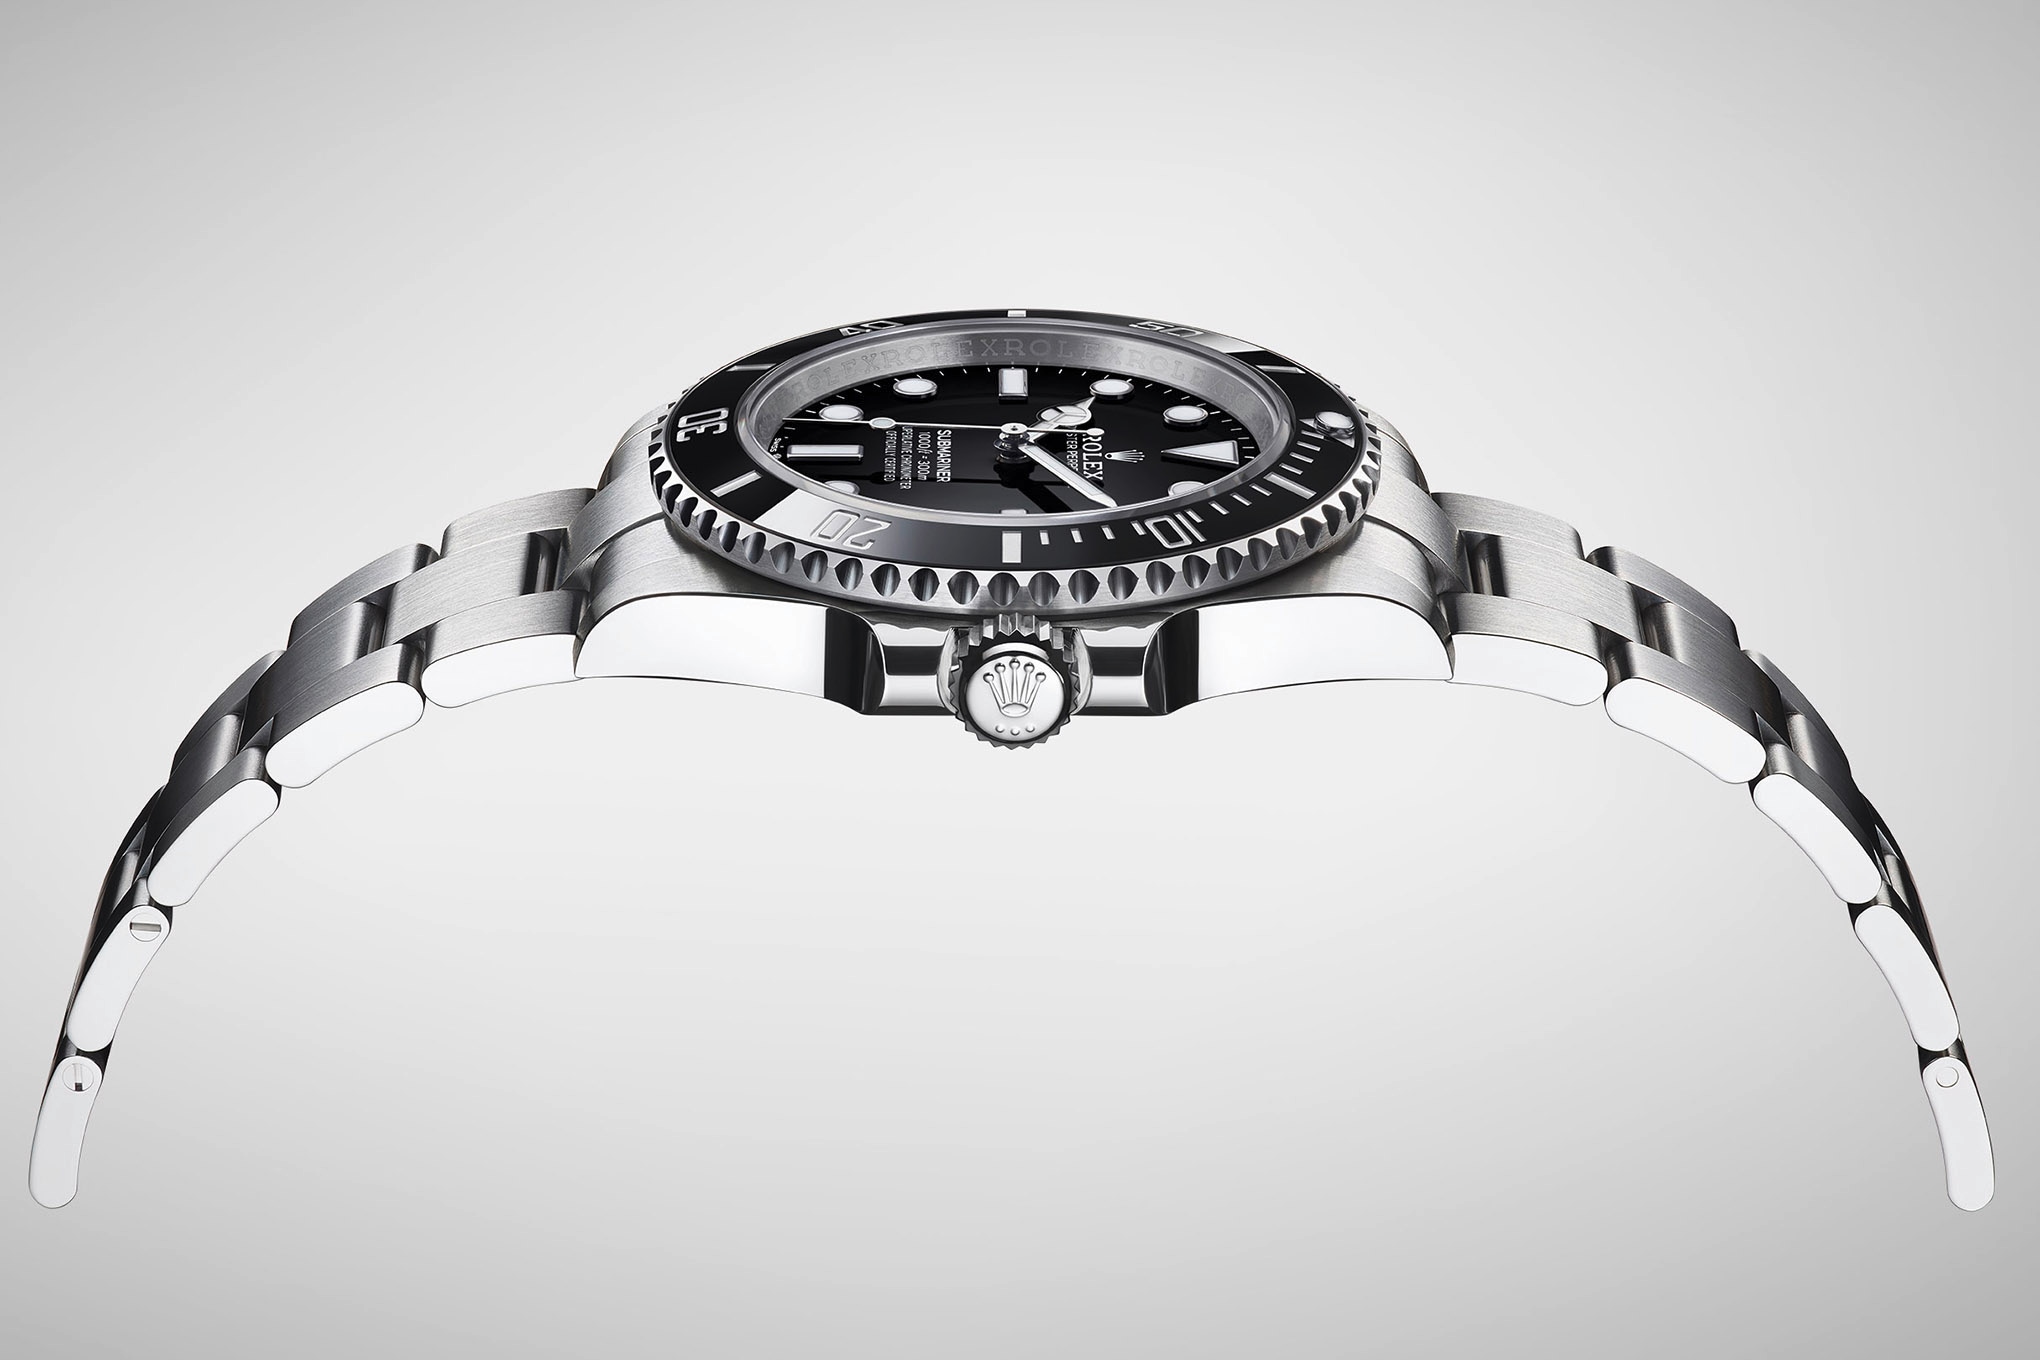 Rolex Ladies Datejust 2-Tone Watch 179173 Black Dial